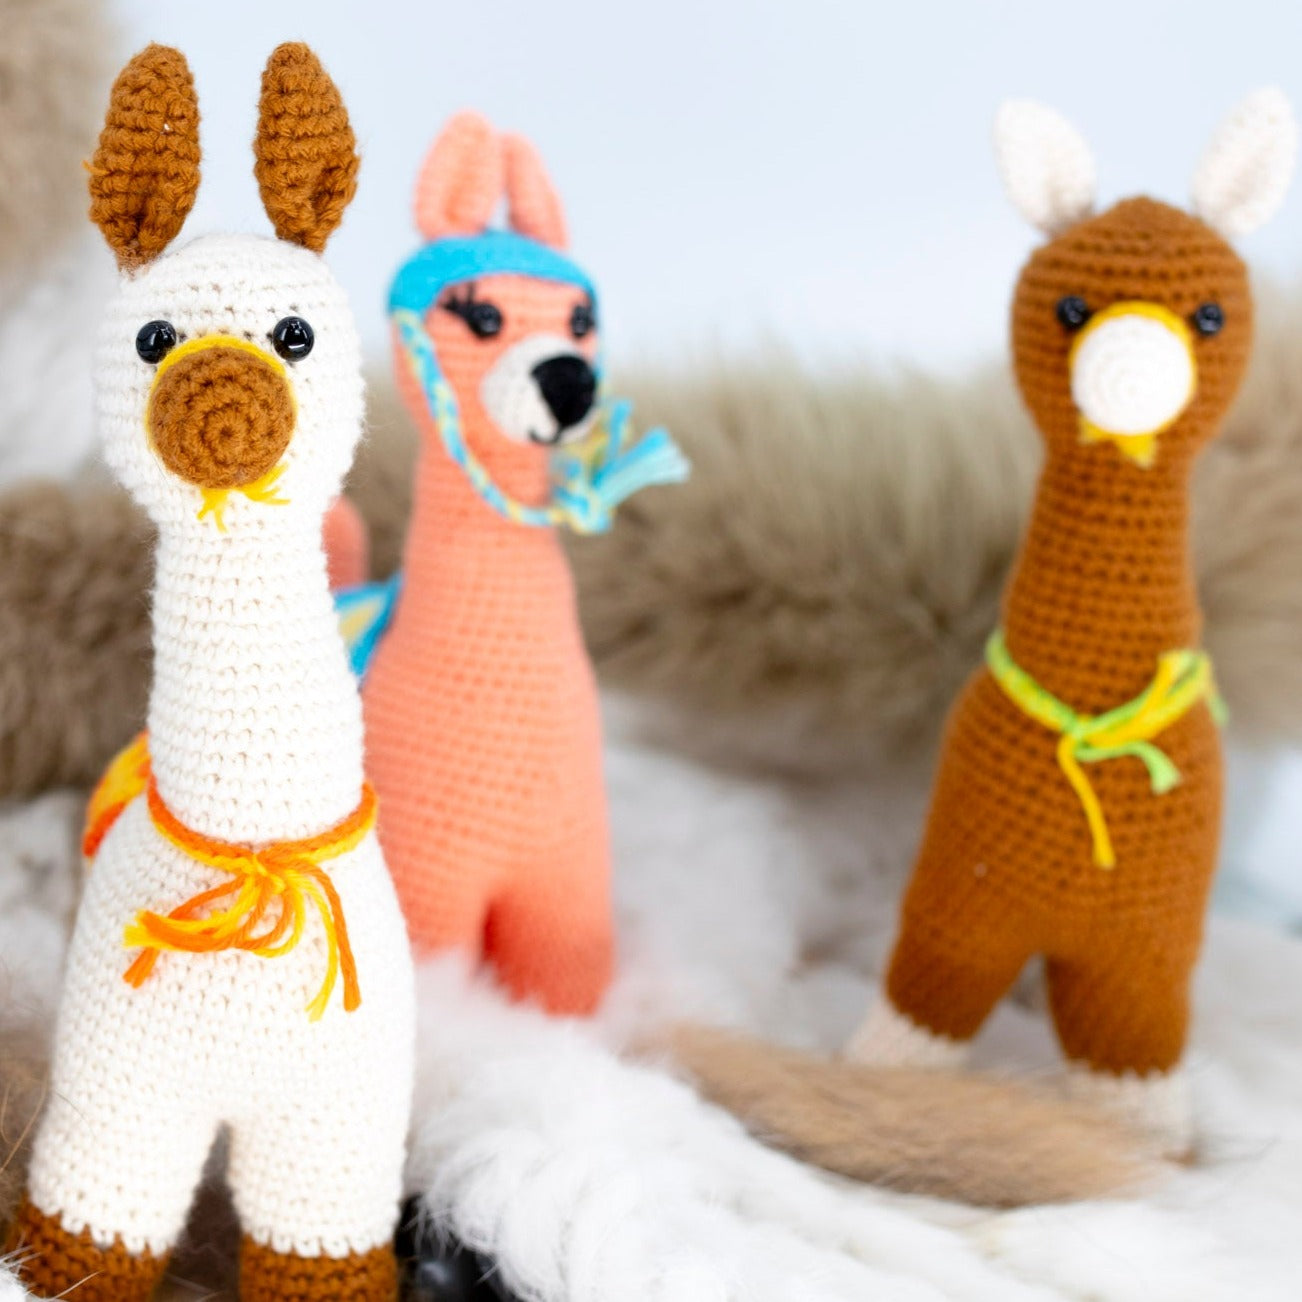 White Llama Crochet Toy